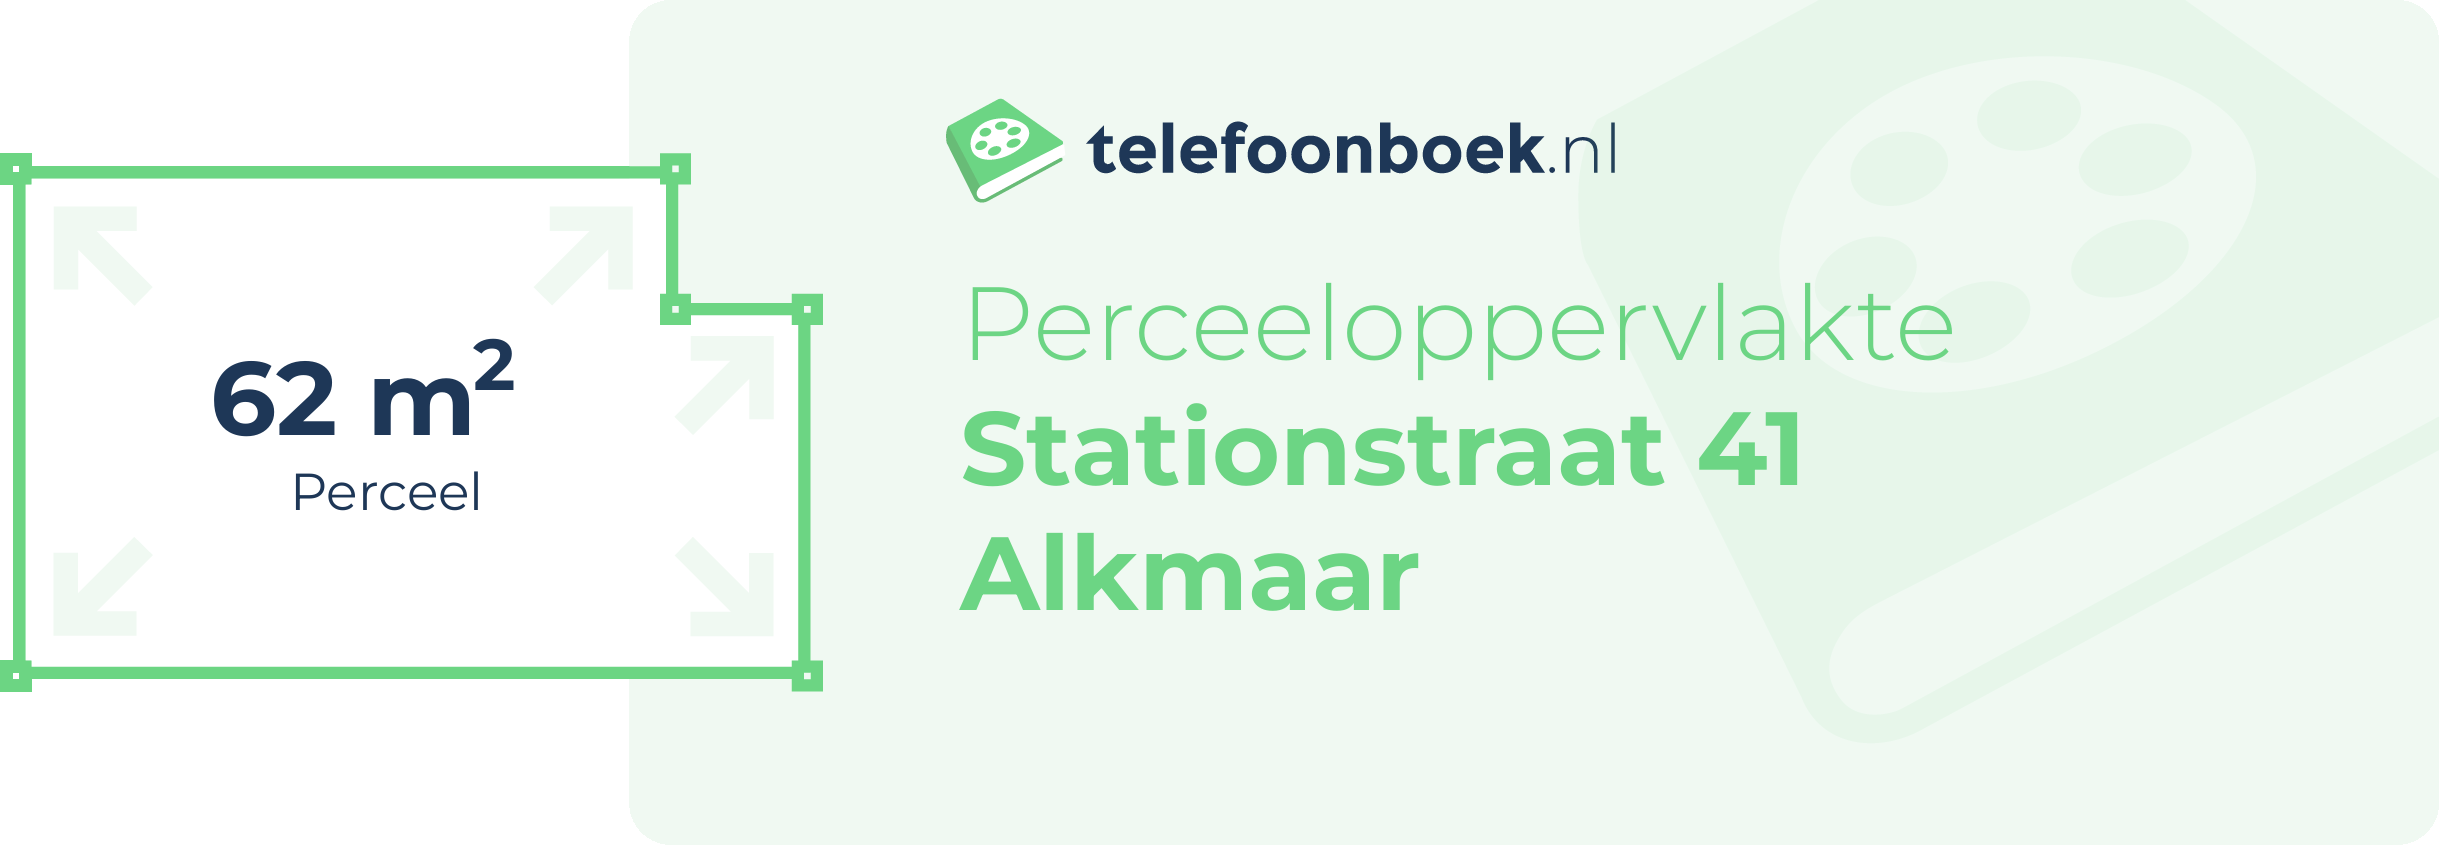 Perceeloppervlakte Stationstraat 41 Alkmaar